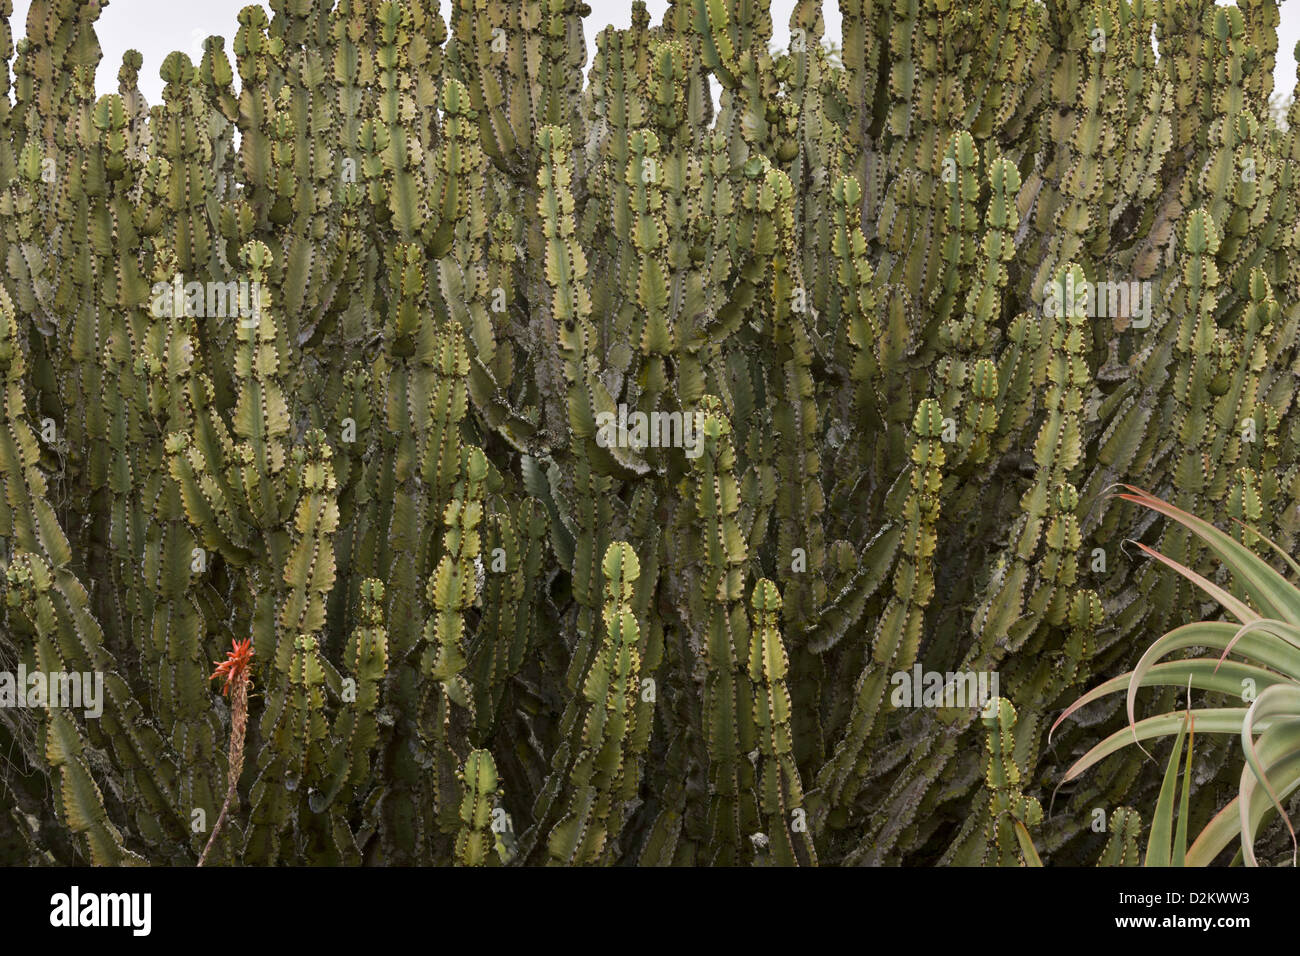 Candelabra Tree (Euphorbia ingens) close-up, South Africa Stock Photo